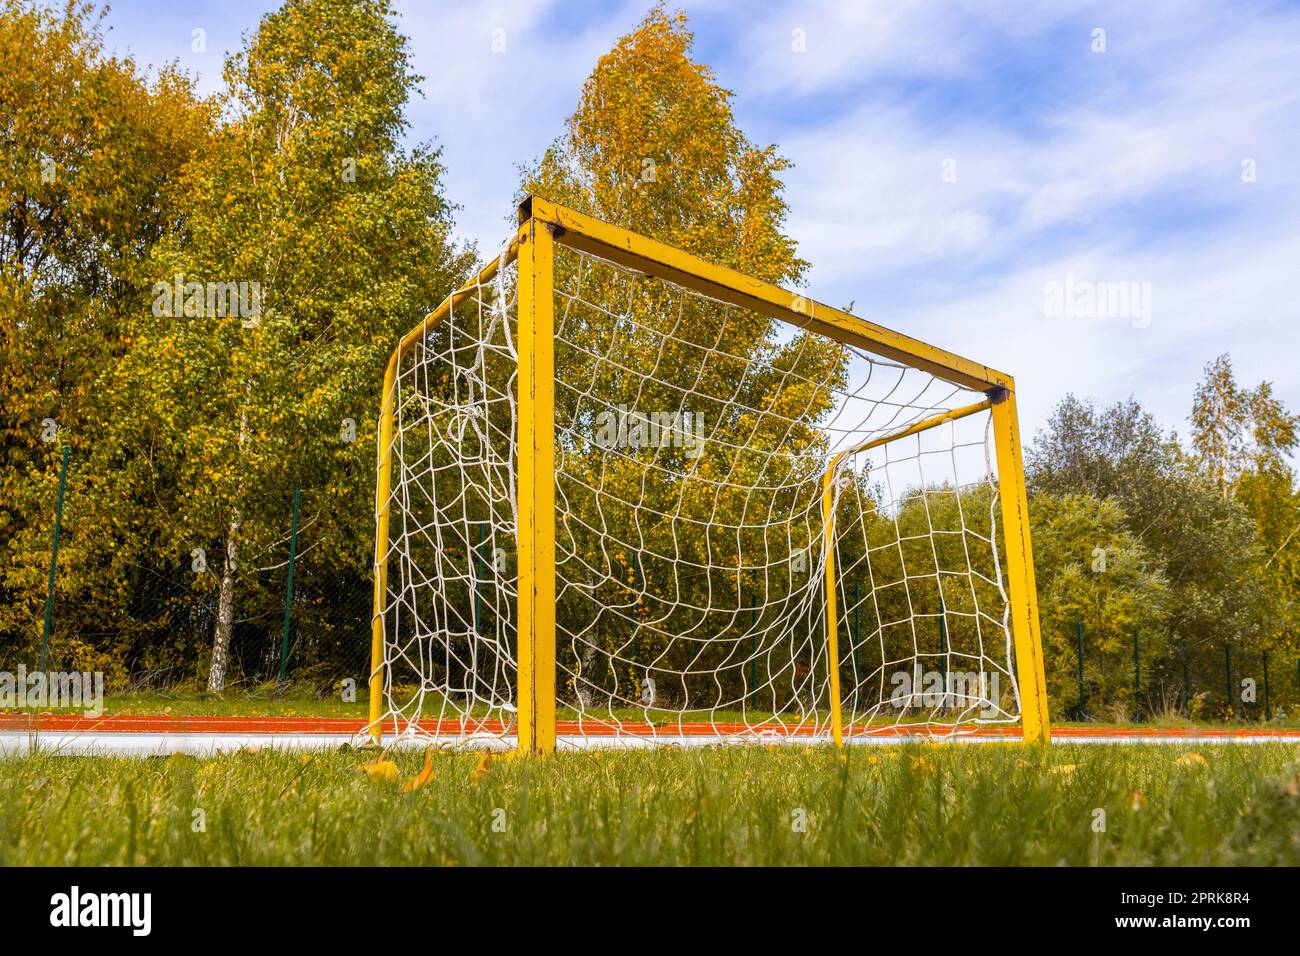 https://c8.alamy.com/comp/2PRK8R4/small-yellow-football-goals-in-a-stadium-during-autumn-season-football-goals-for-kids-training-2PRK8R4.jpg